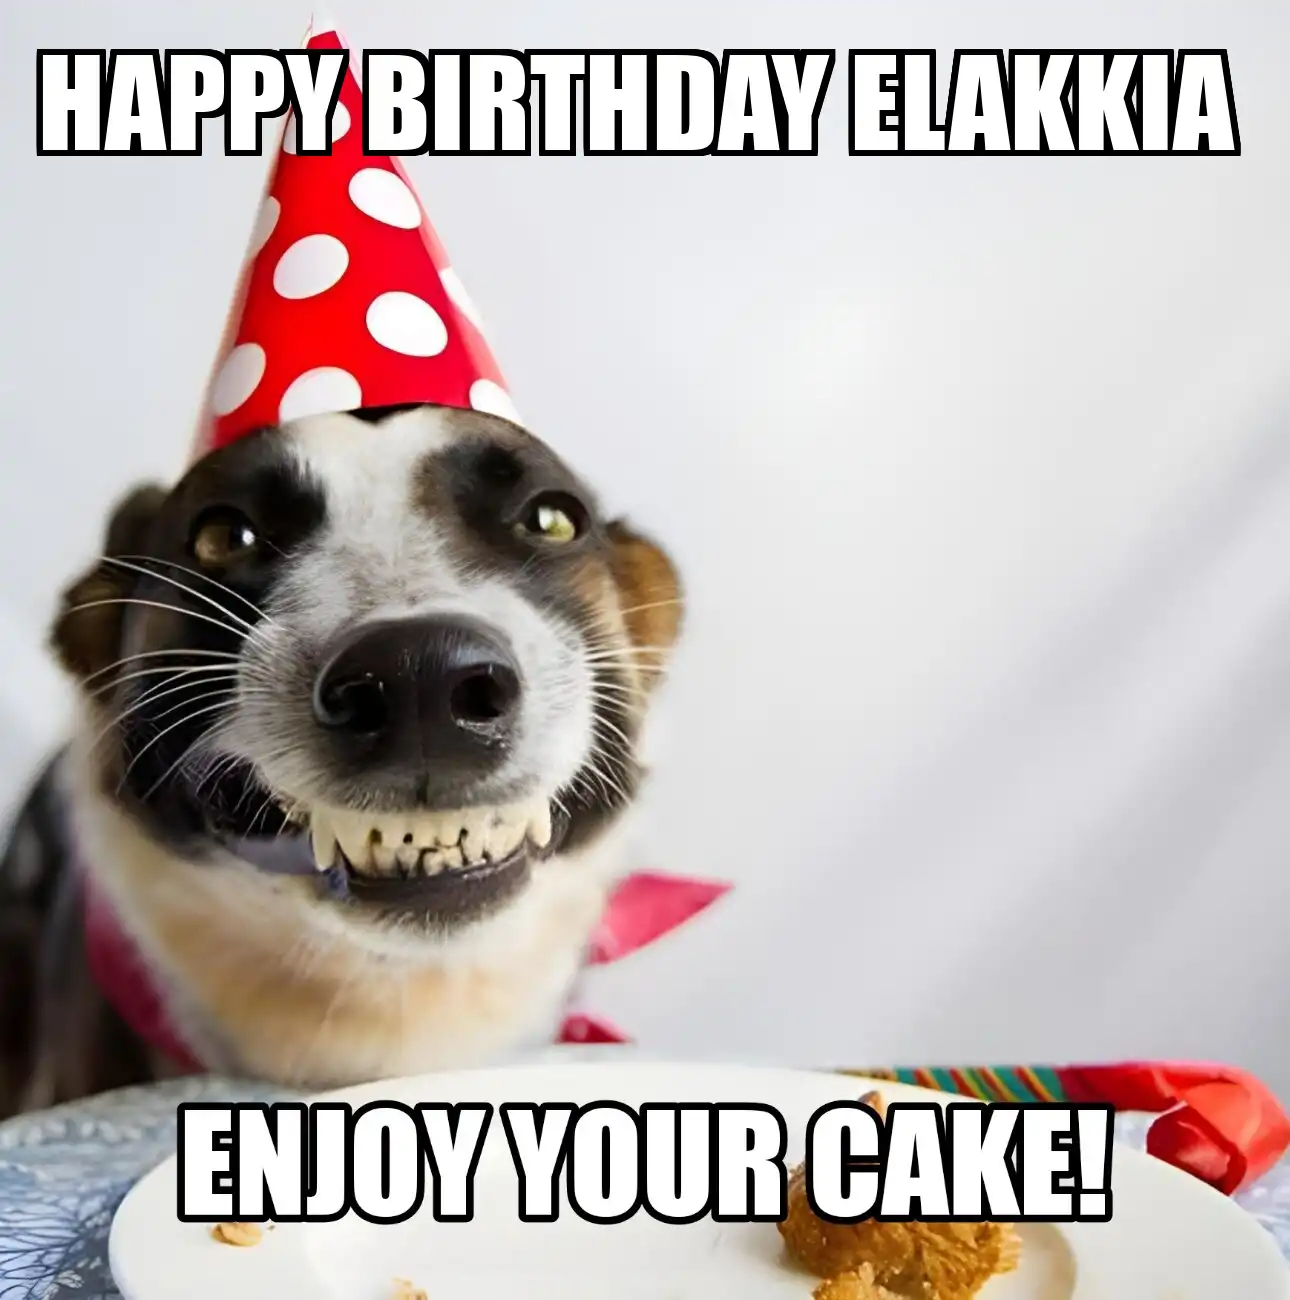 Happy Birthday Elakkia Enjoy Your Cake Dog Meme